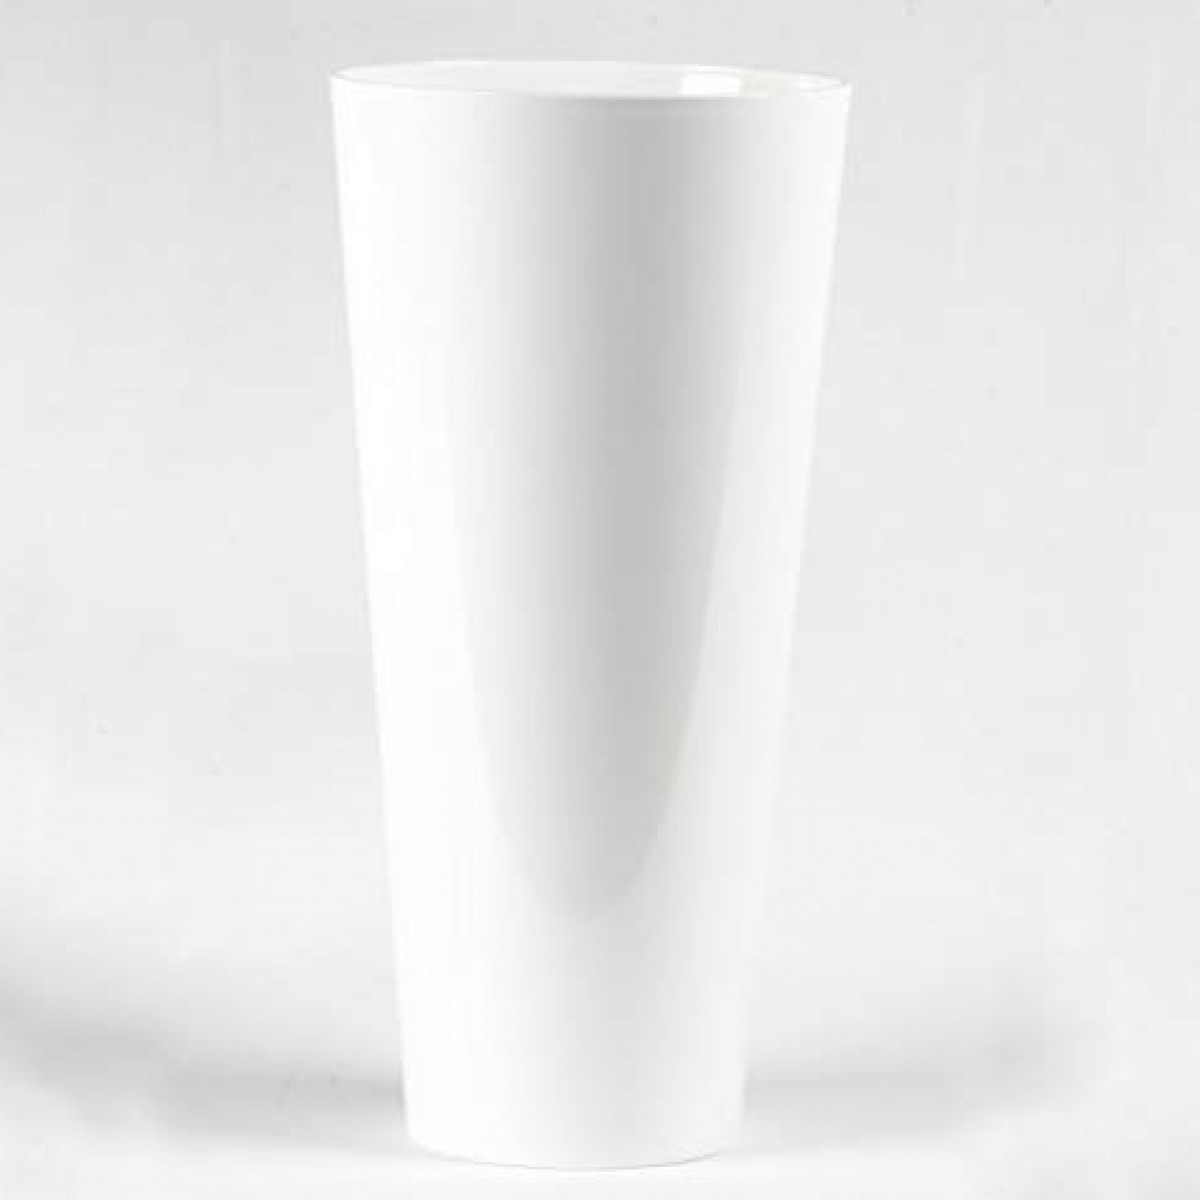 5130 Conical White 18x45cm Acrylic Vase - 1 No